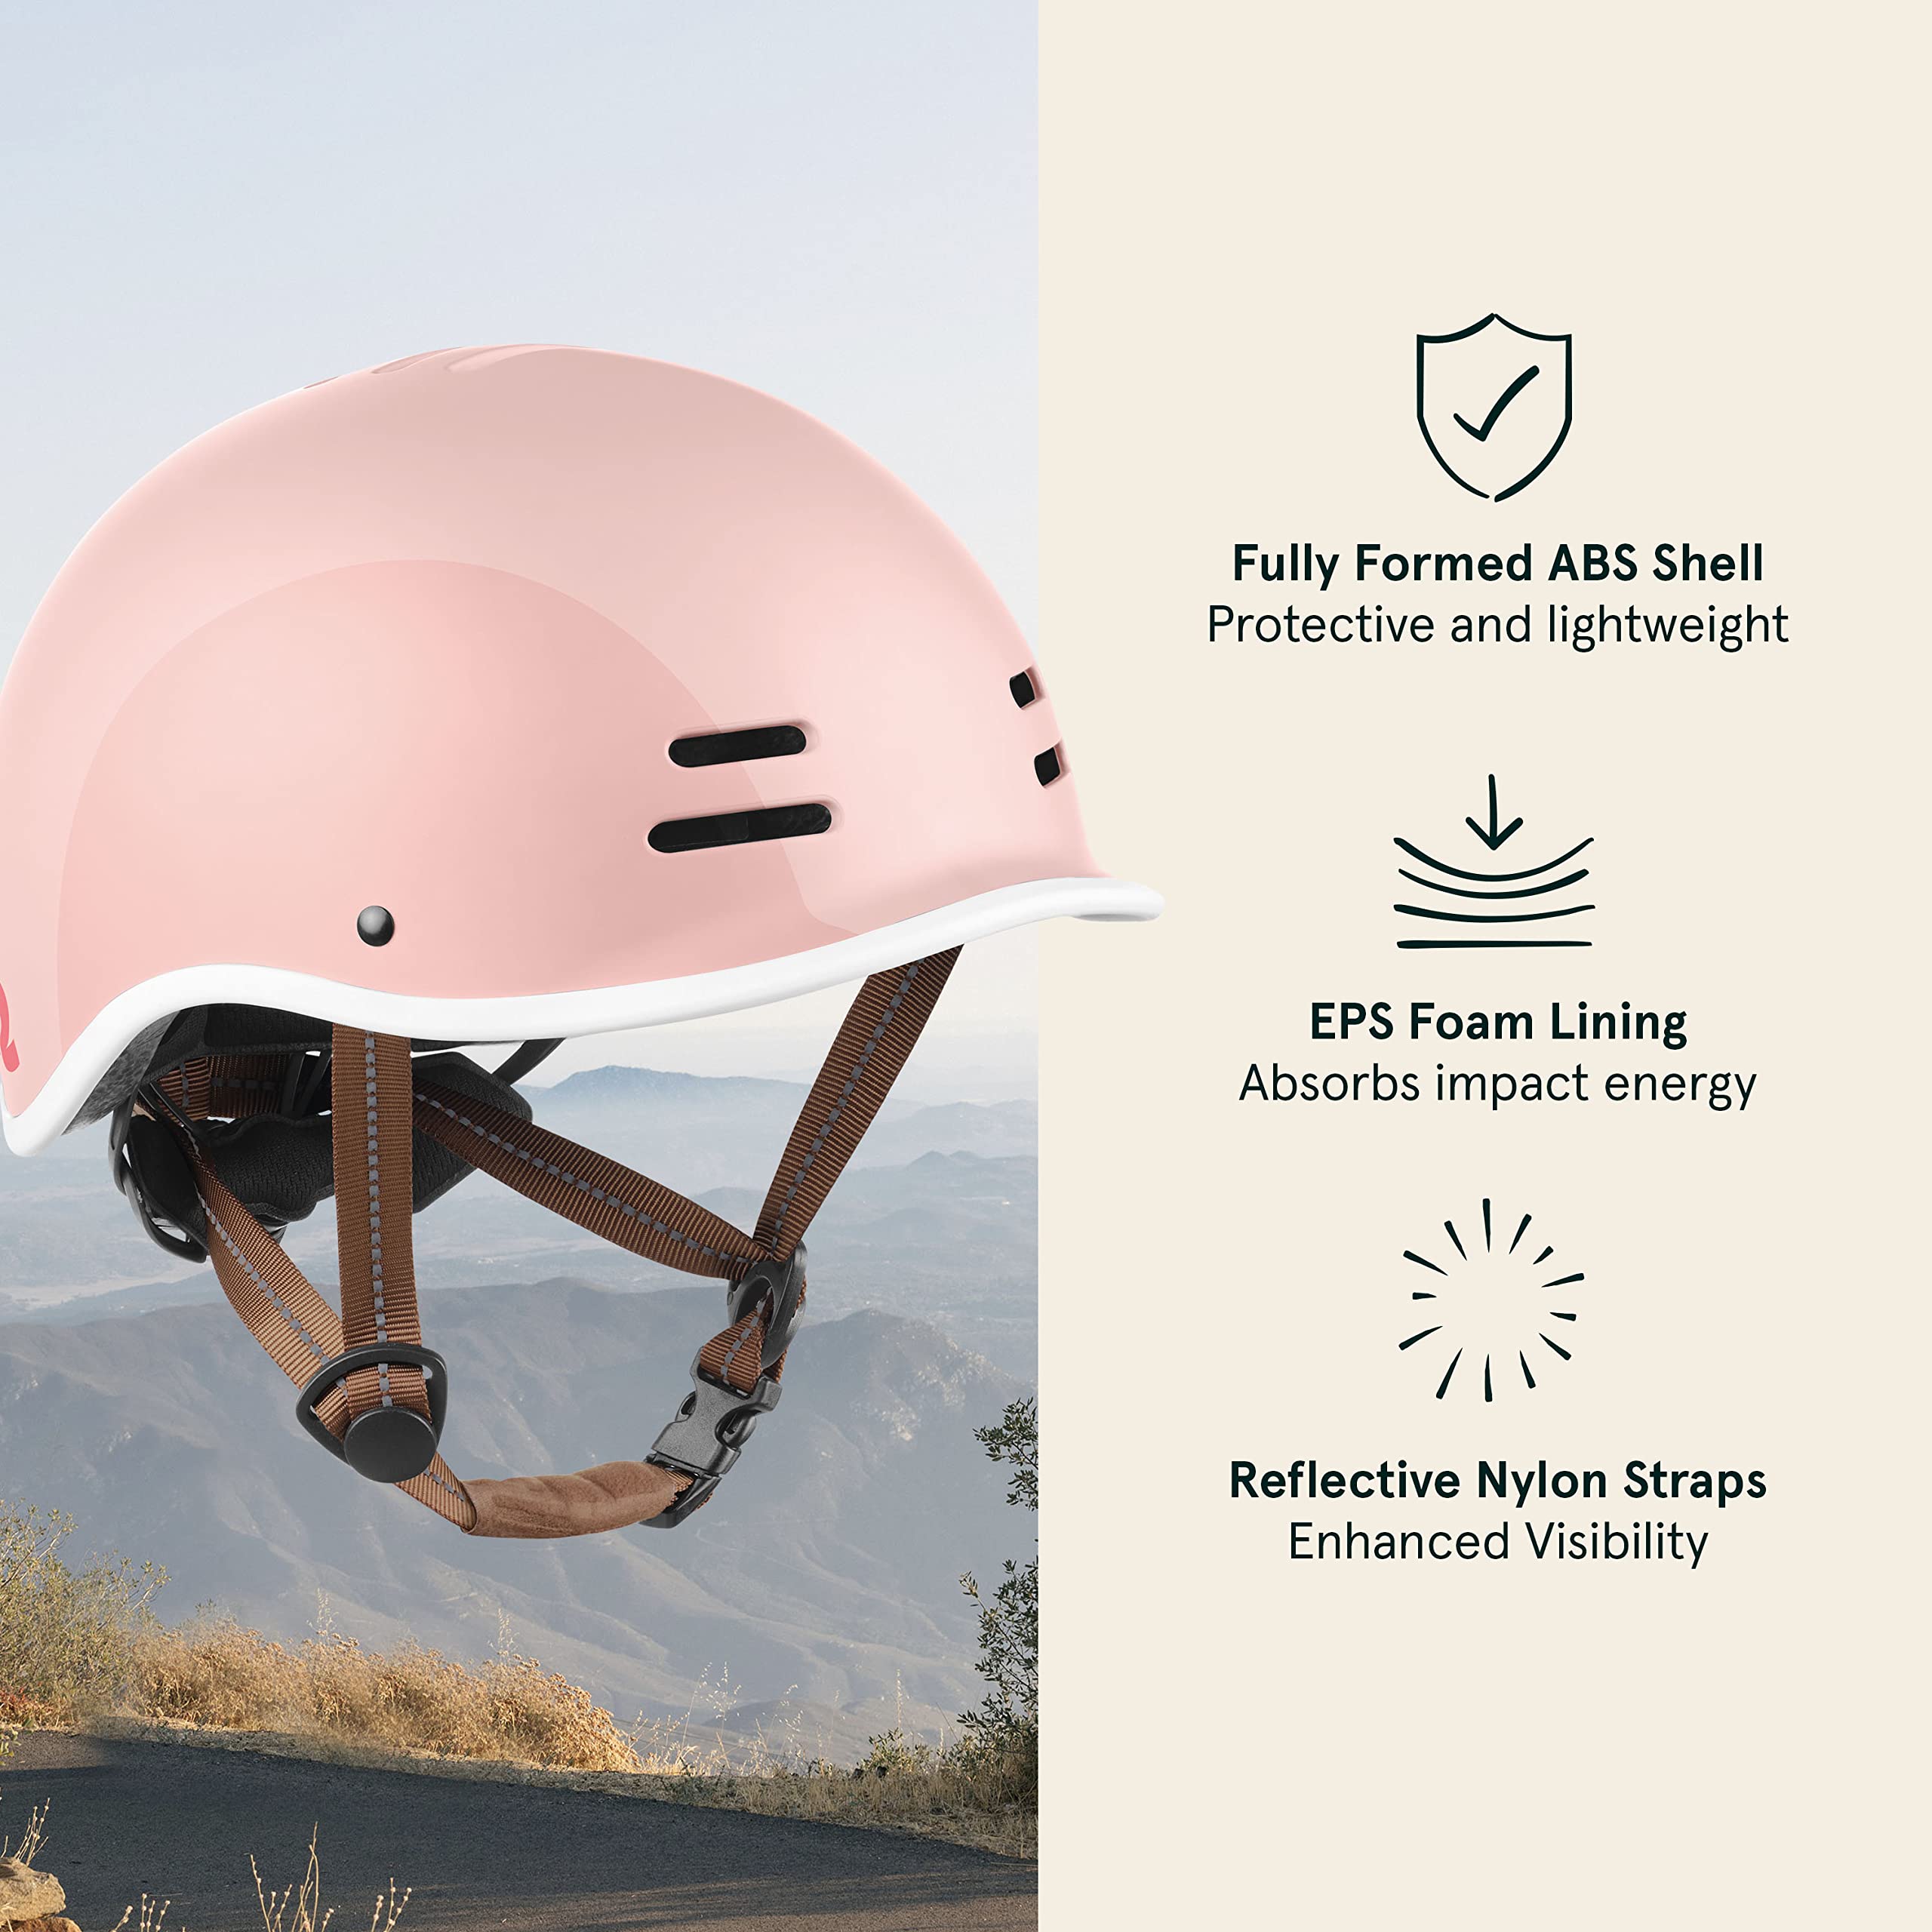 Retrospec Remi Kids' Bike Helmet for Youth Boys & Girls- Bicycle Helmet with Built-In Visor and Adjustable Reflective Straps for Skateboarding, Scooters, Rollerblading